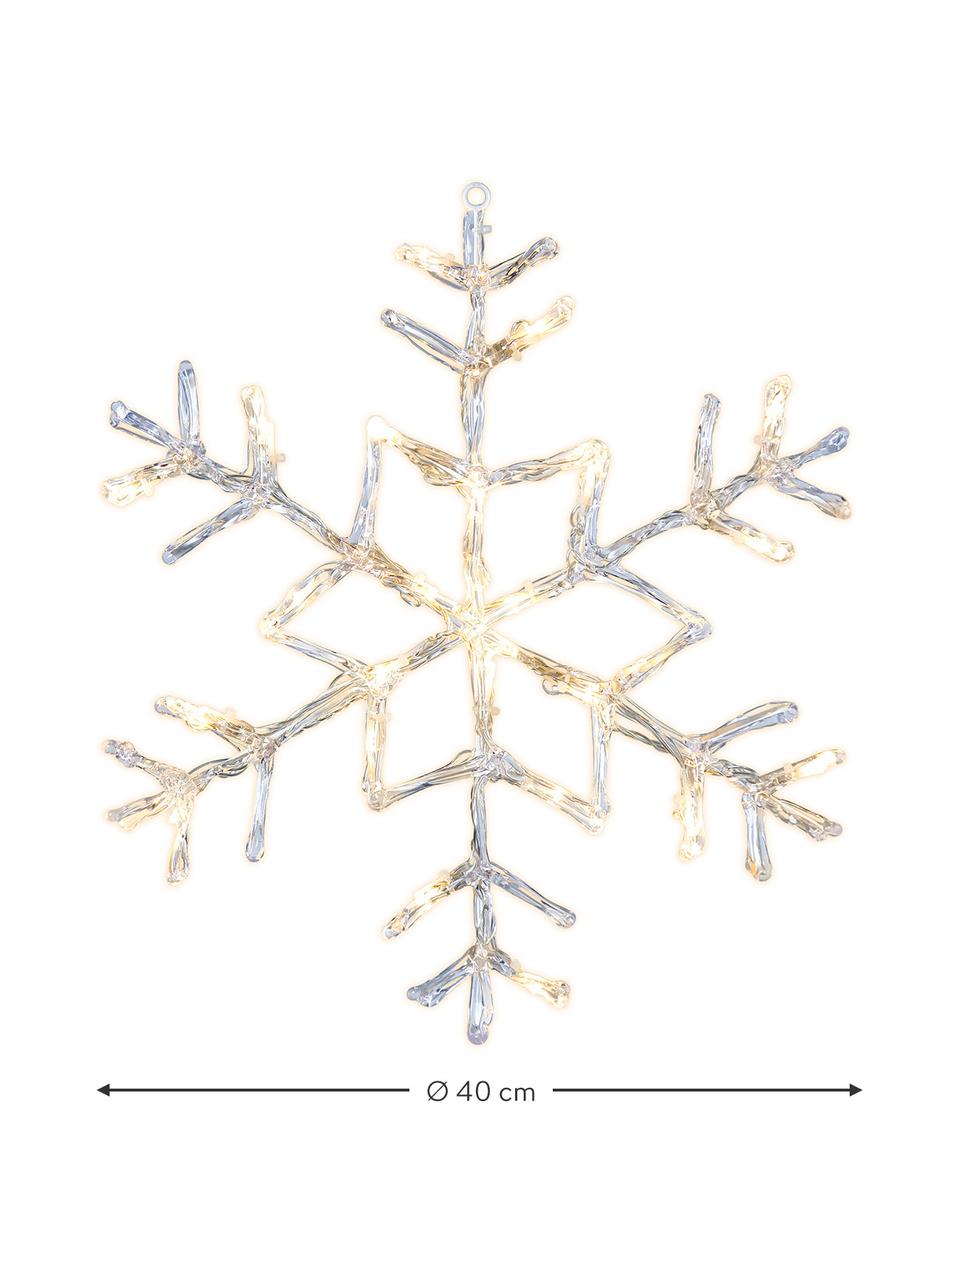 Décoration lumineuse LED Snowflake Antarctica, Transparent, Ø 40 cm